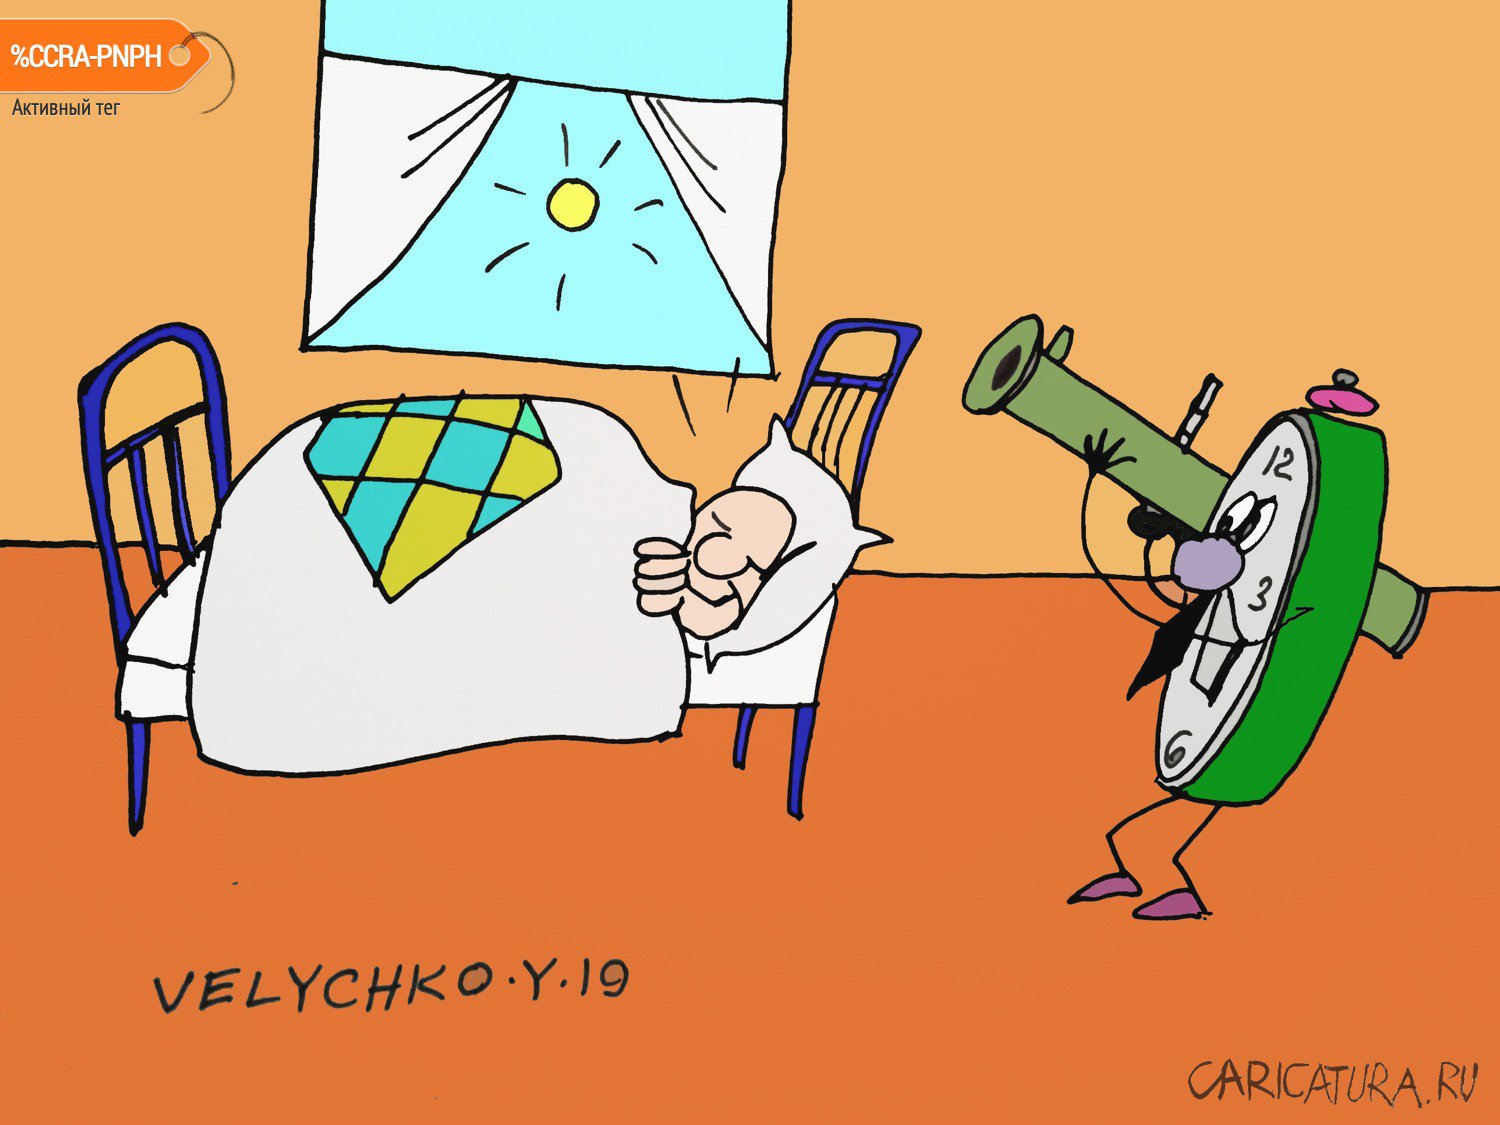 Карикатура "Будильник", Юрий Величко